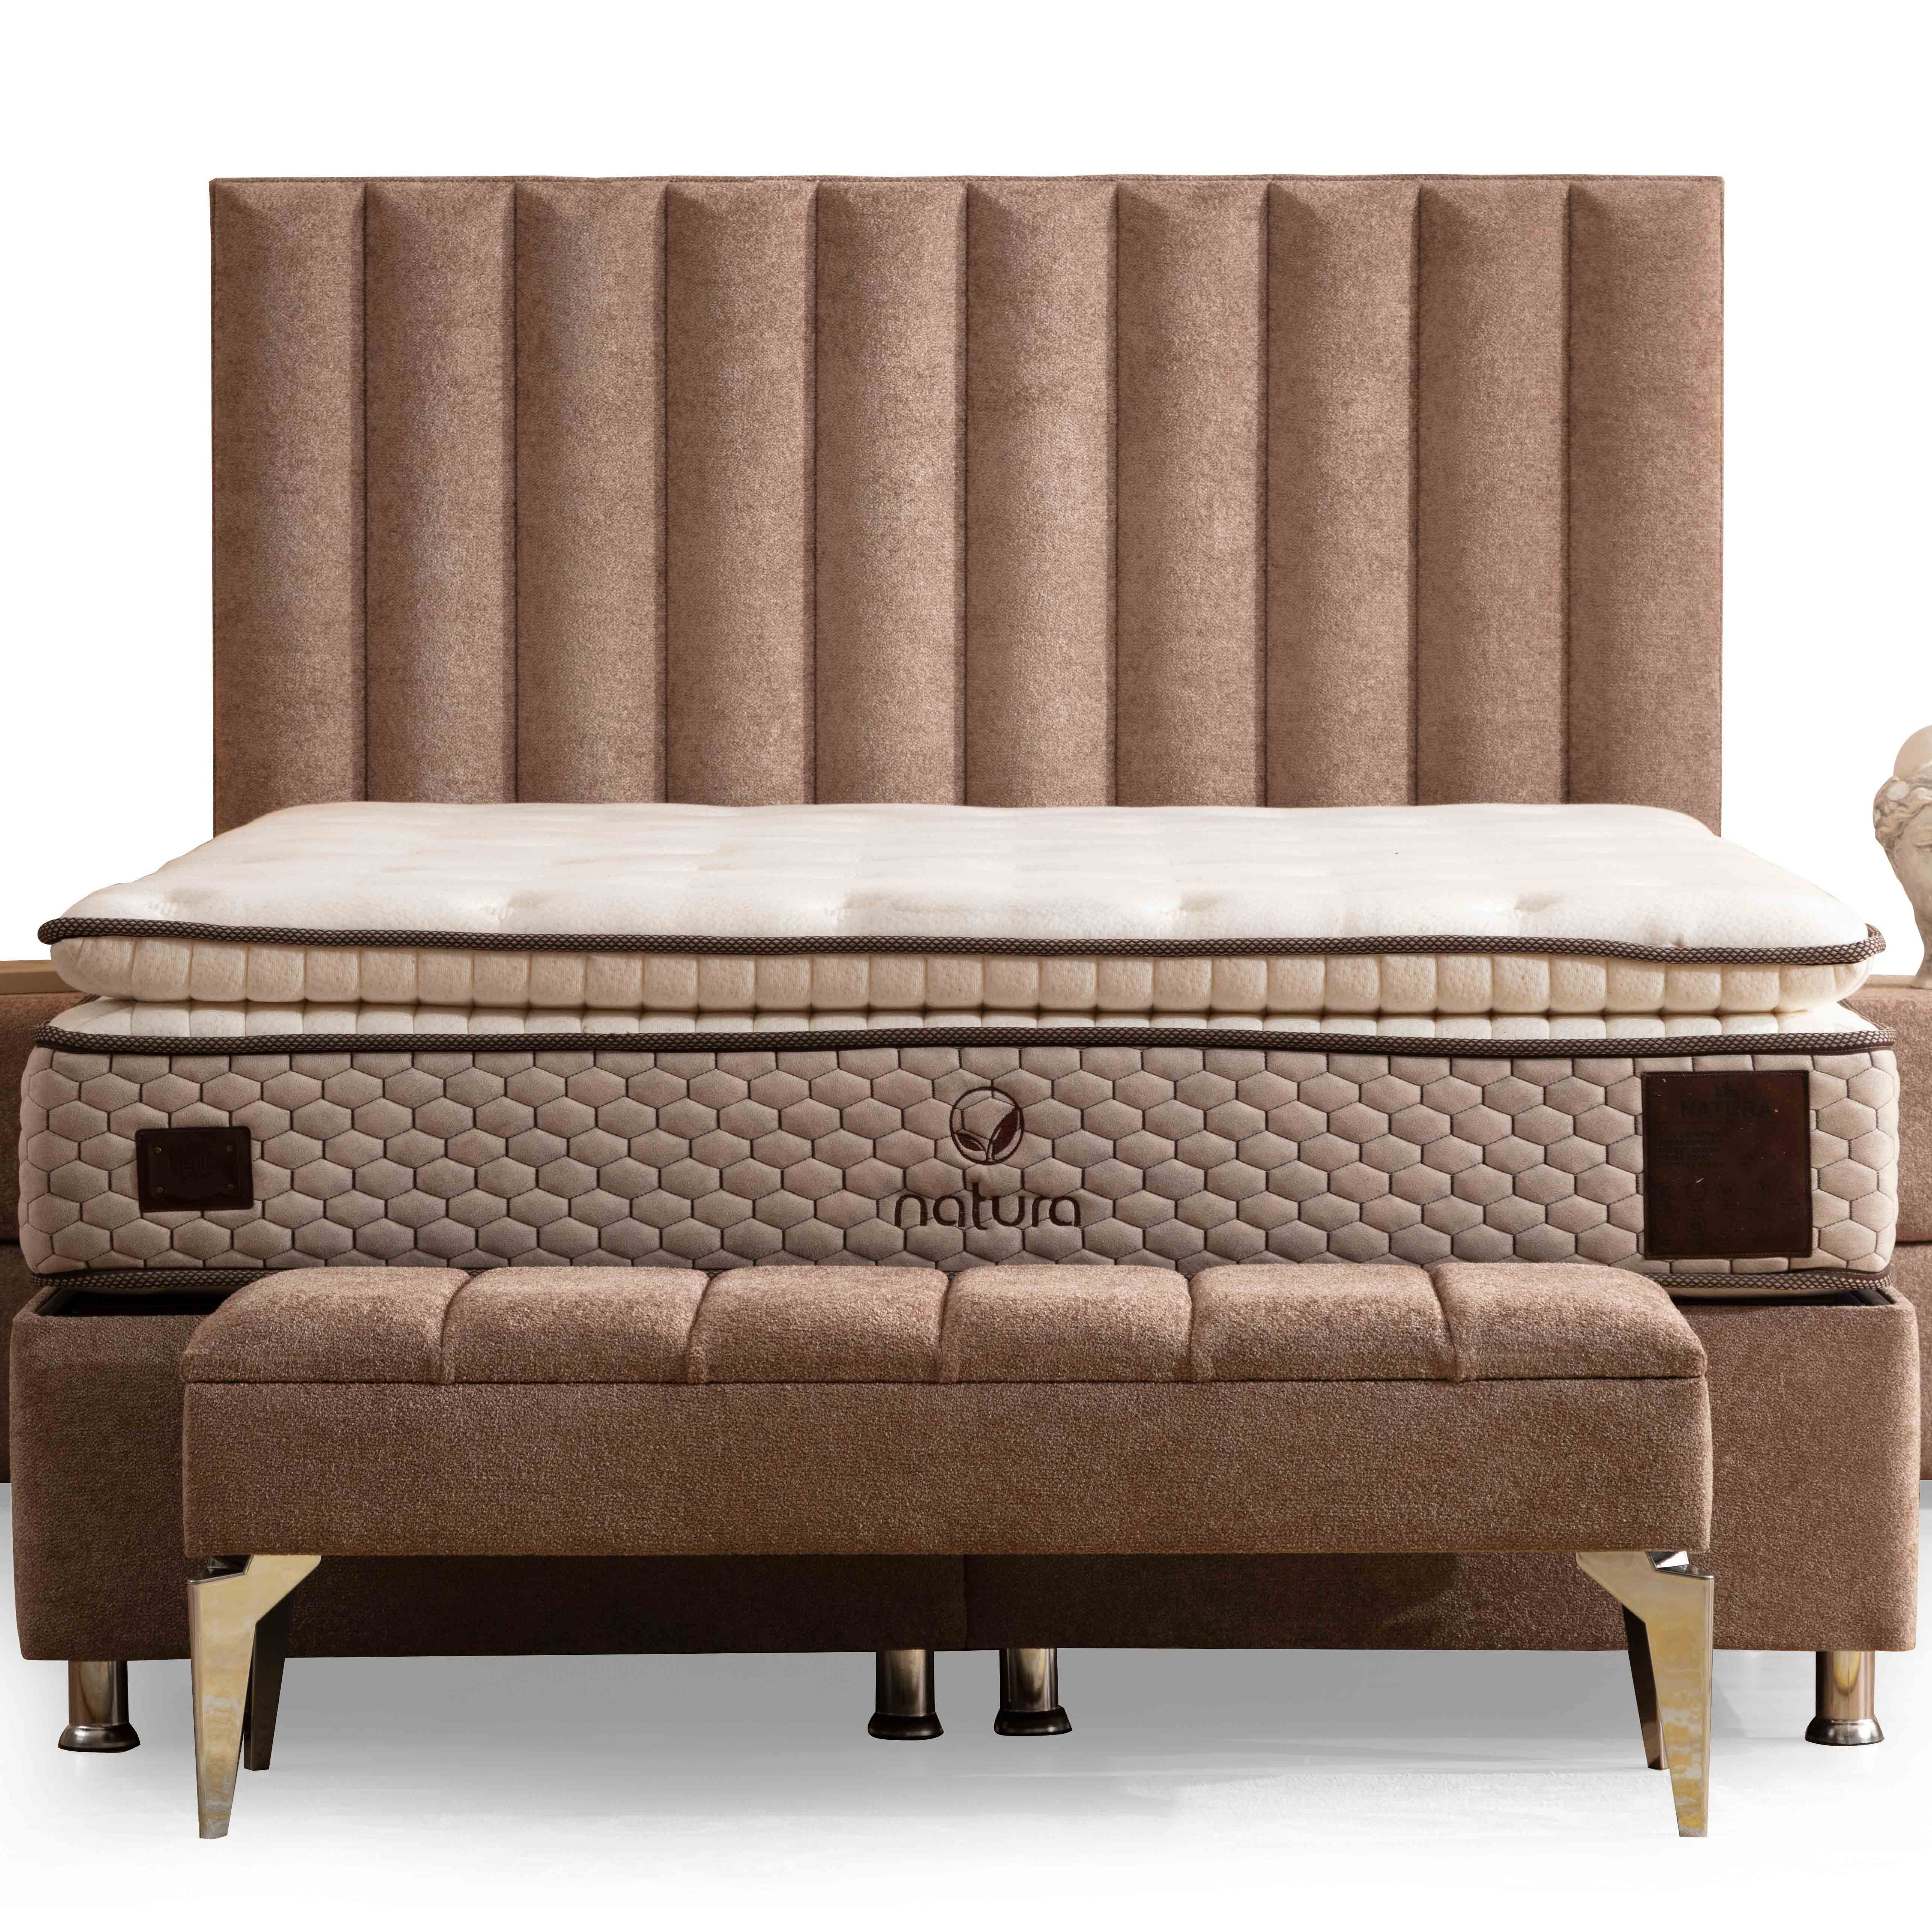 Nice Bed With Storage 160x200 cm